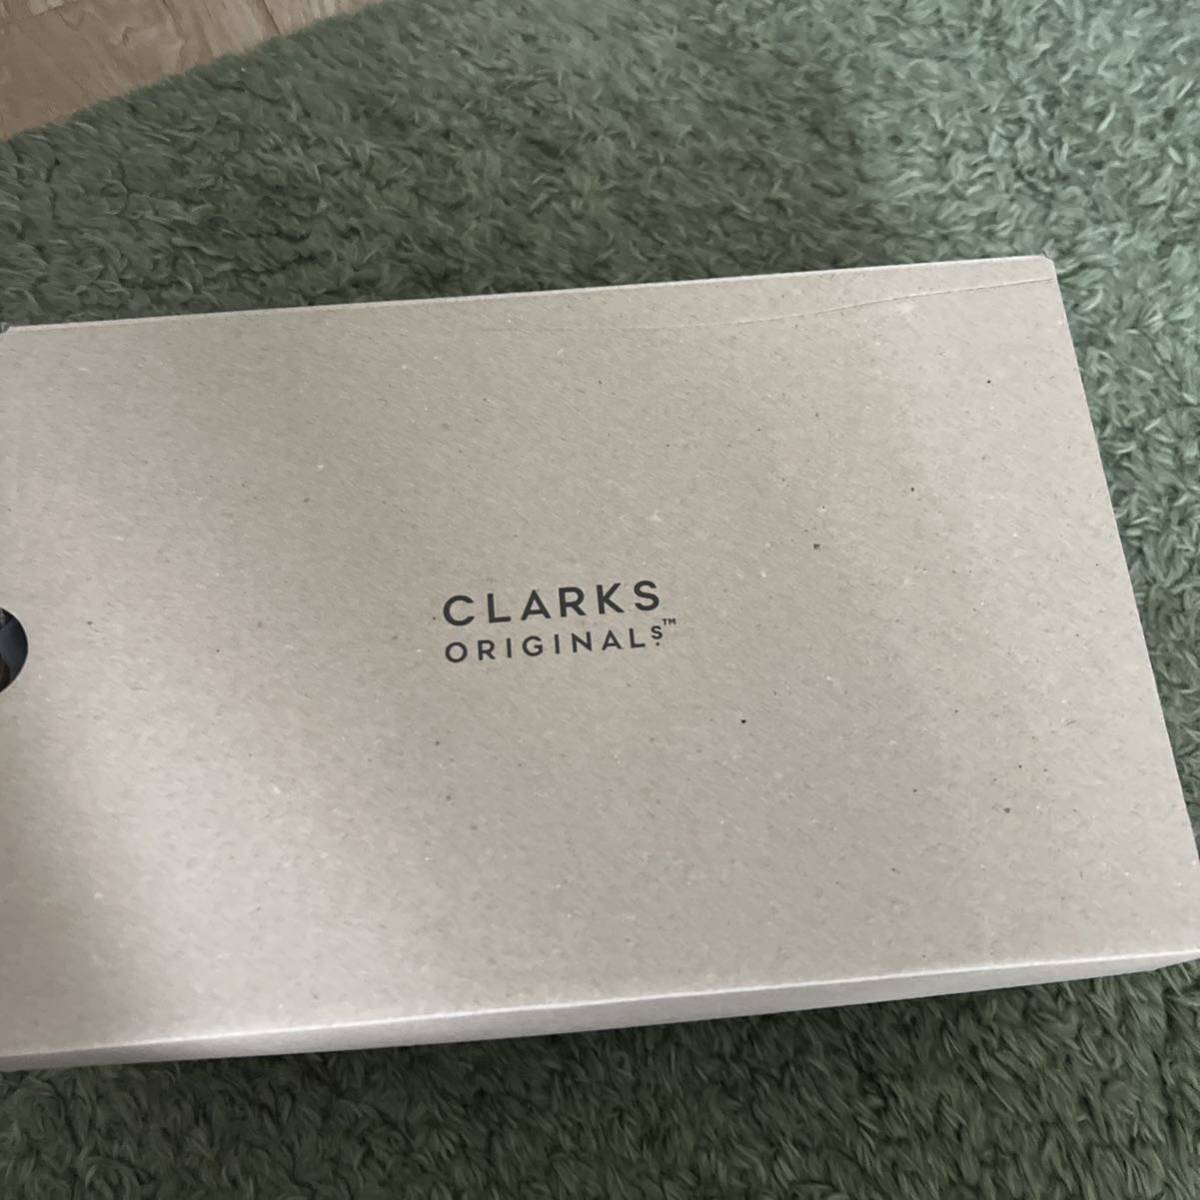  новый товар Clarks CLARKS WALLABEEwala Be 30cm UK10.5 EU45 ботинки замша обувь 